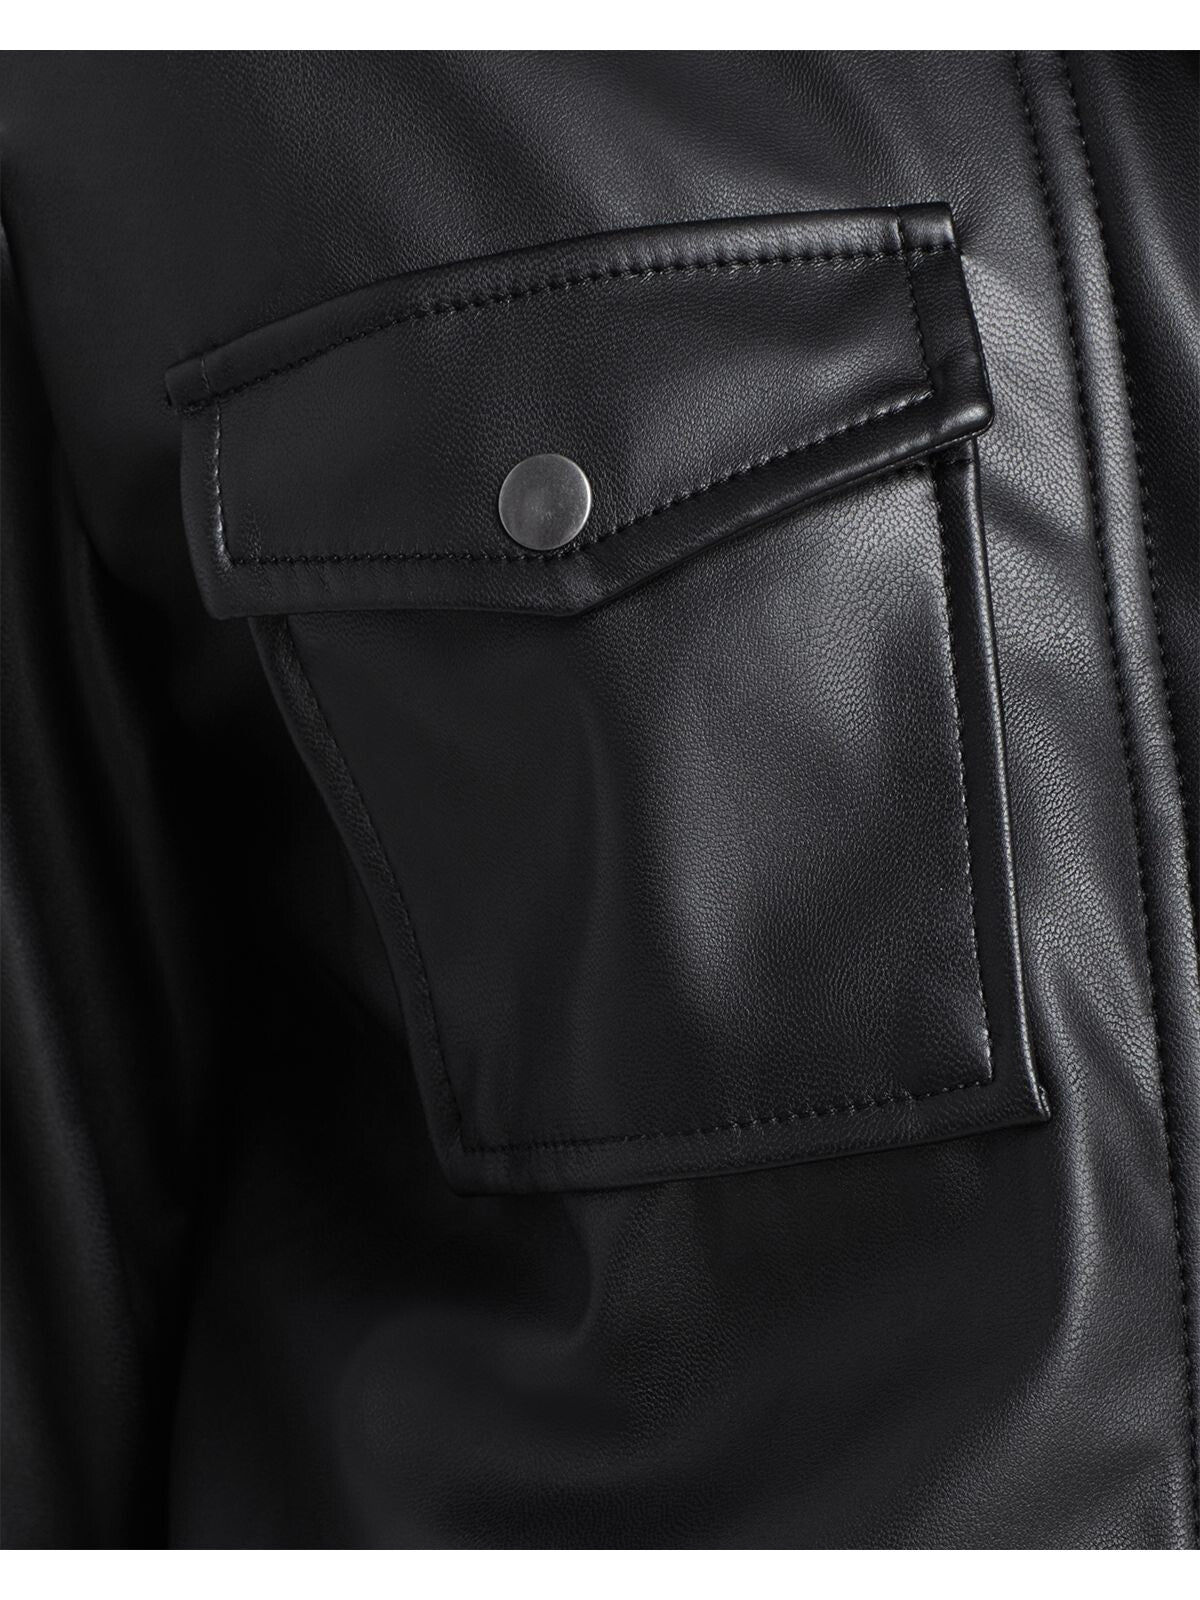 VELVET Womens Black Faux Leather Pocketed Zip Up Jacket